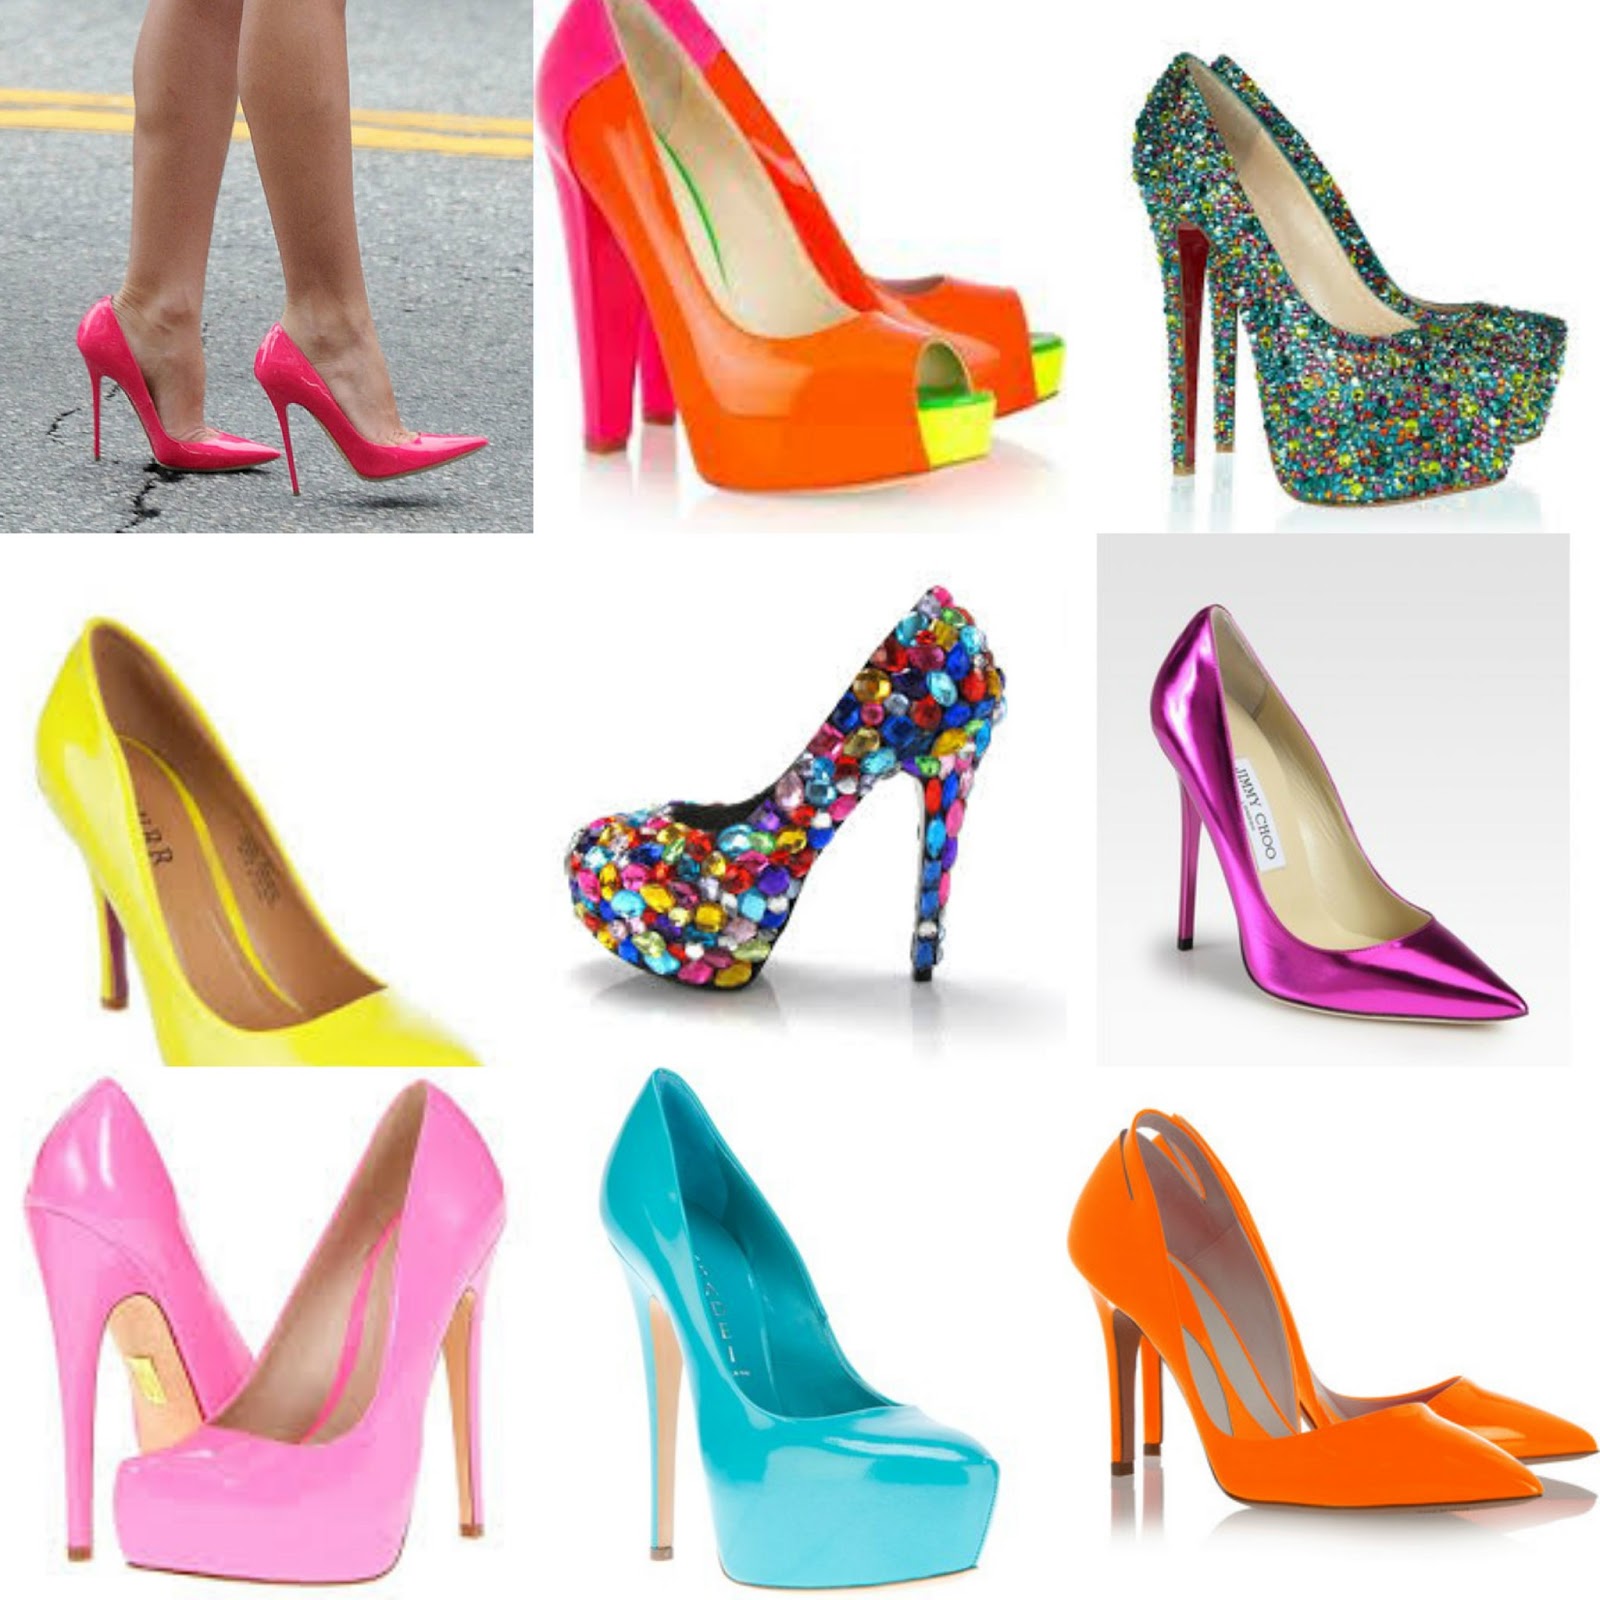 Mookeh's Blog : Let's Talk Shoes 2: Pumps (Spring 2013 Trends)